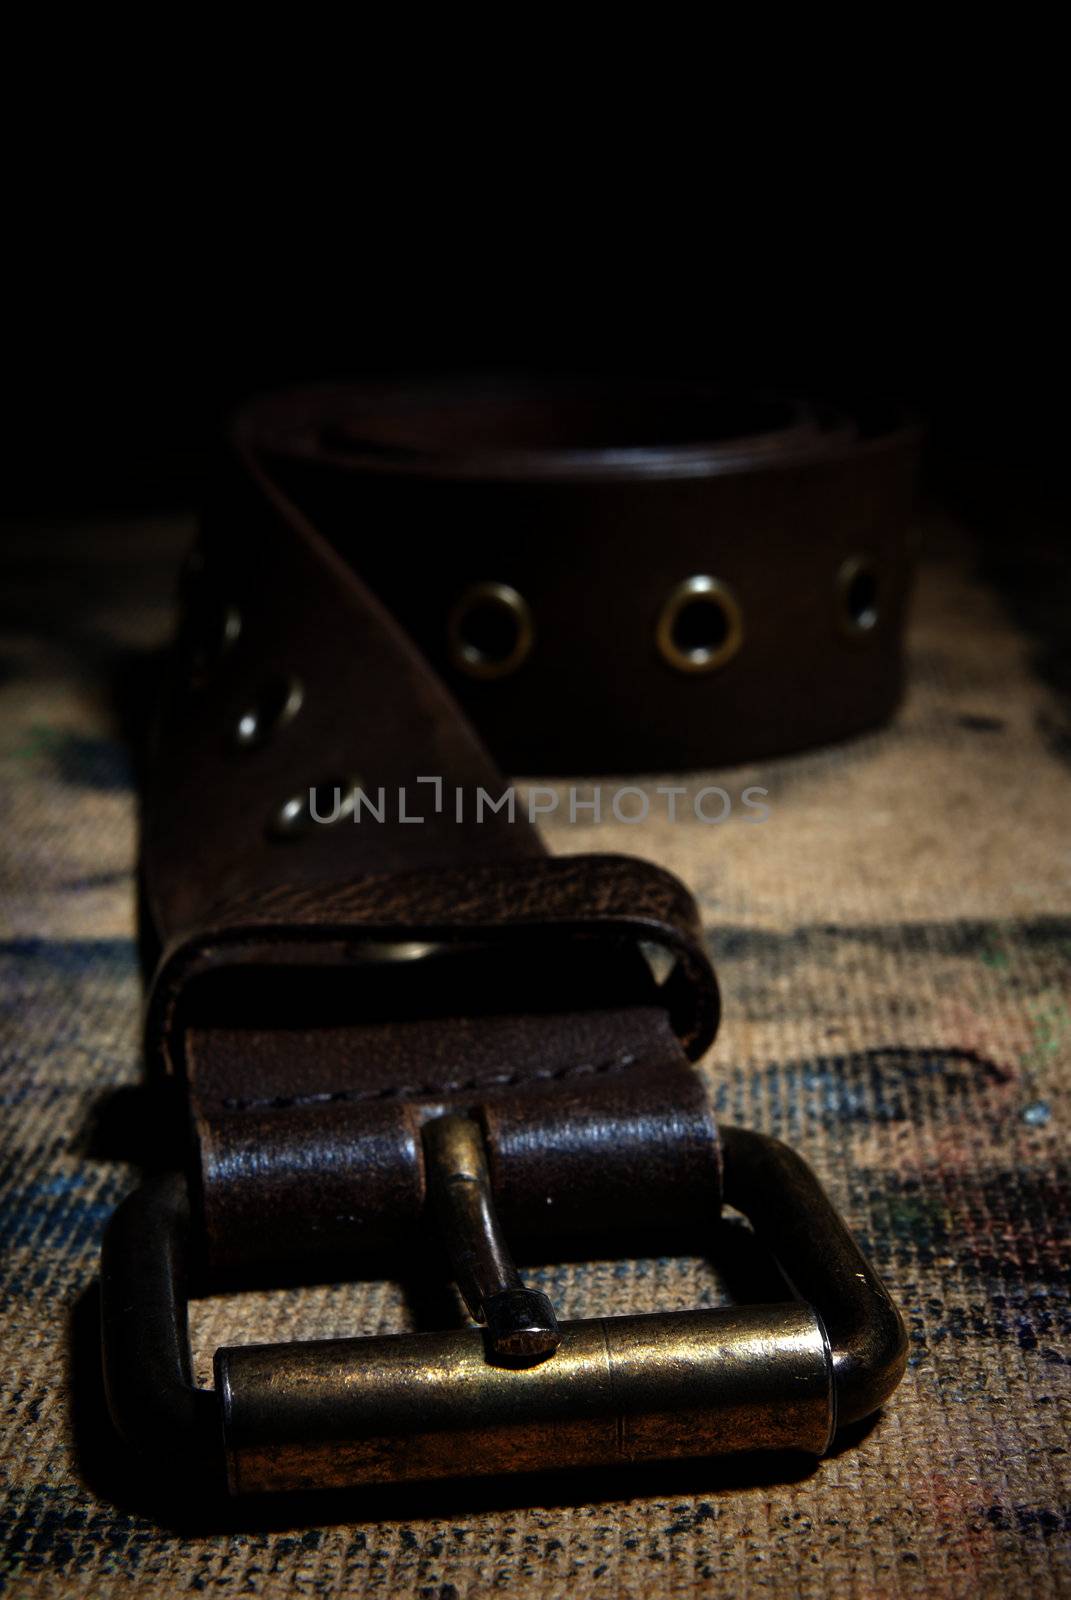 Hardness of the belt by Novic